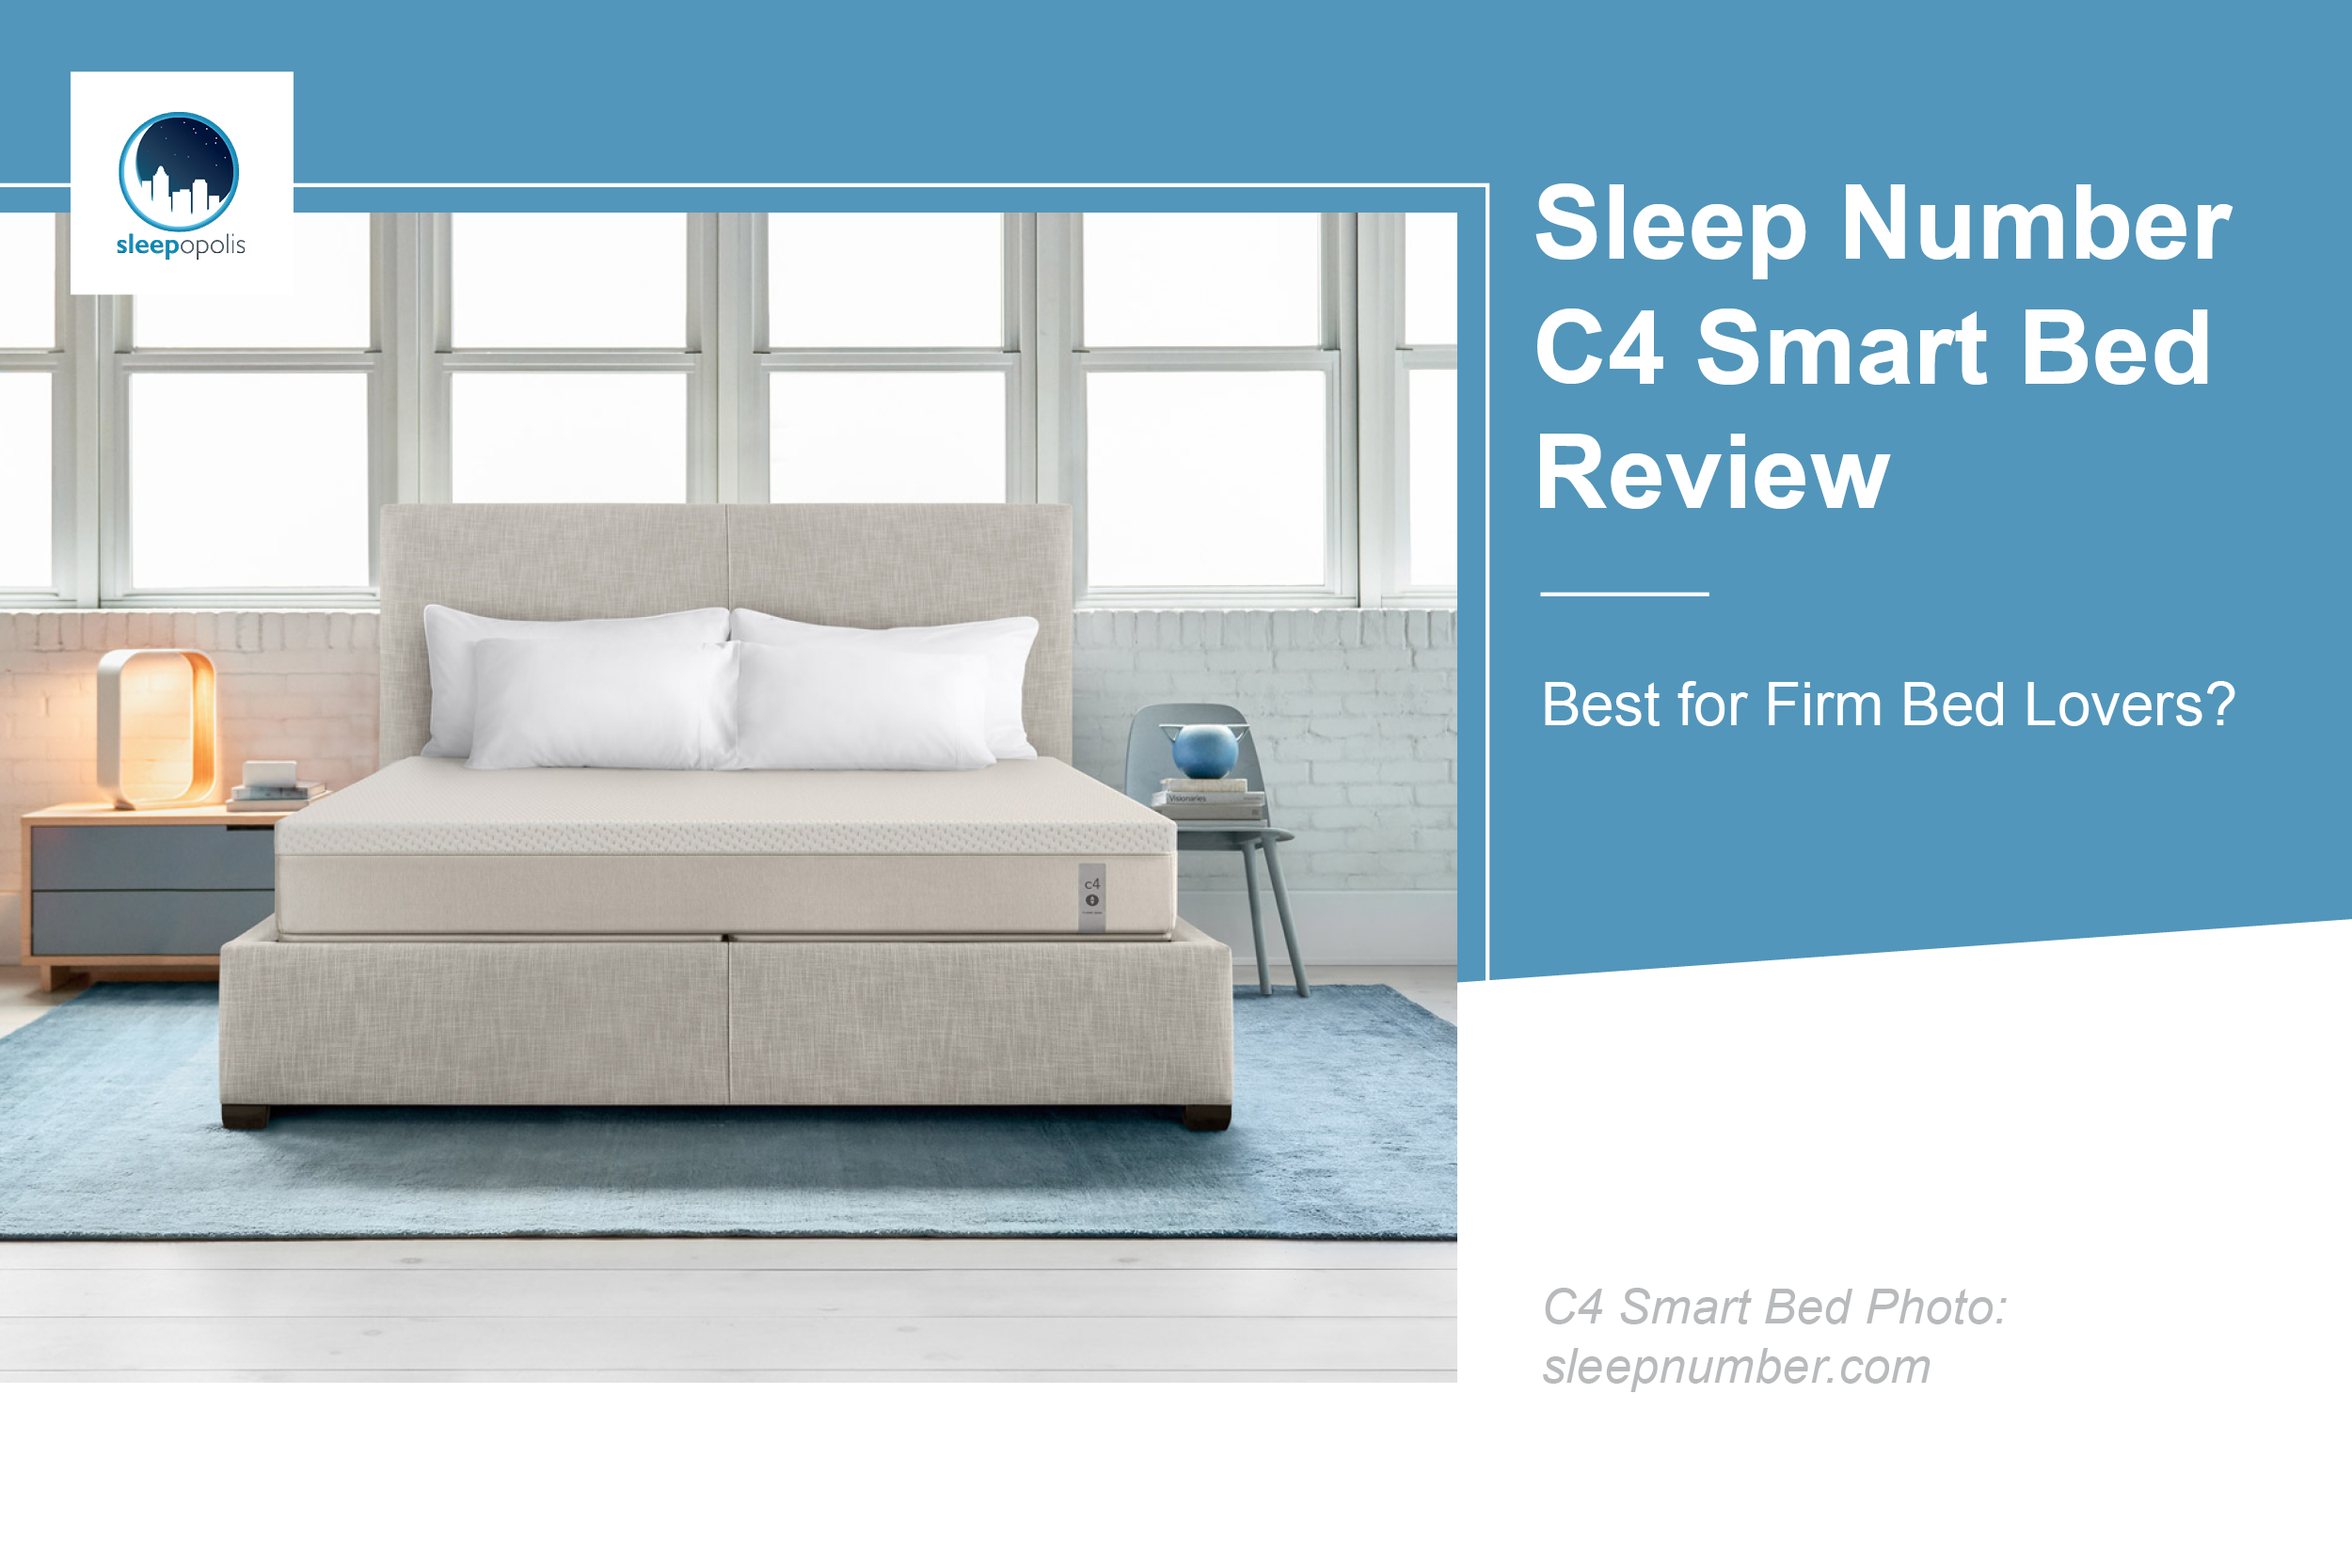 Sleep Number 360 C4 Smart Bed Review, Sleep Number King Bed Reviews